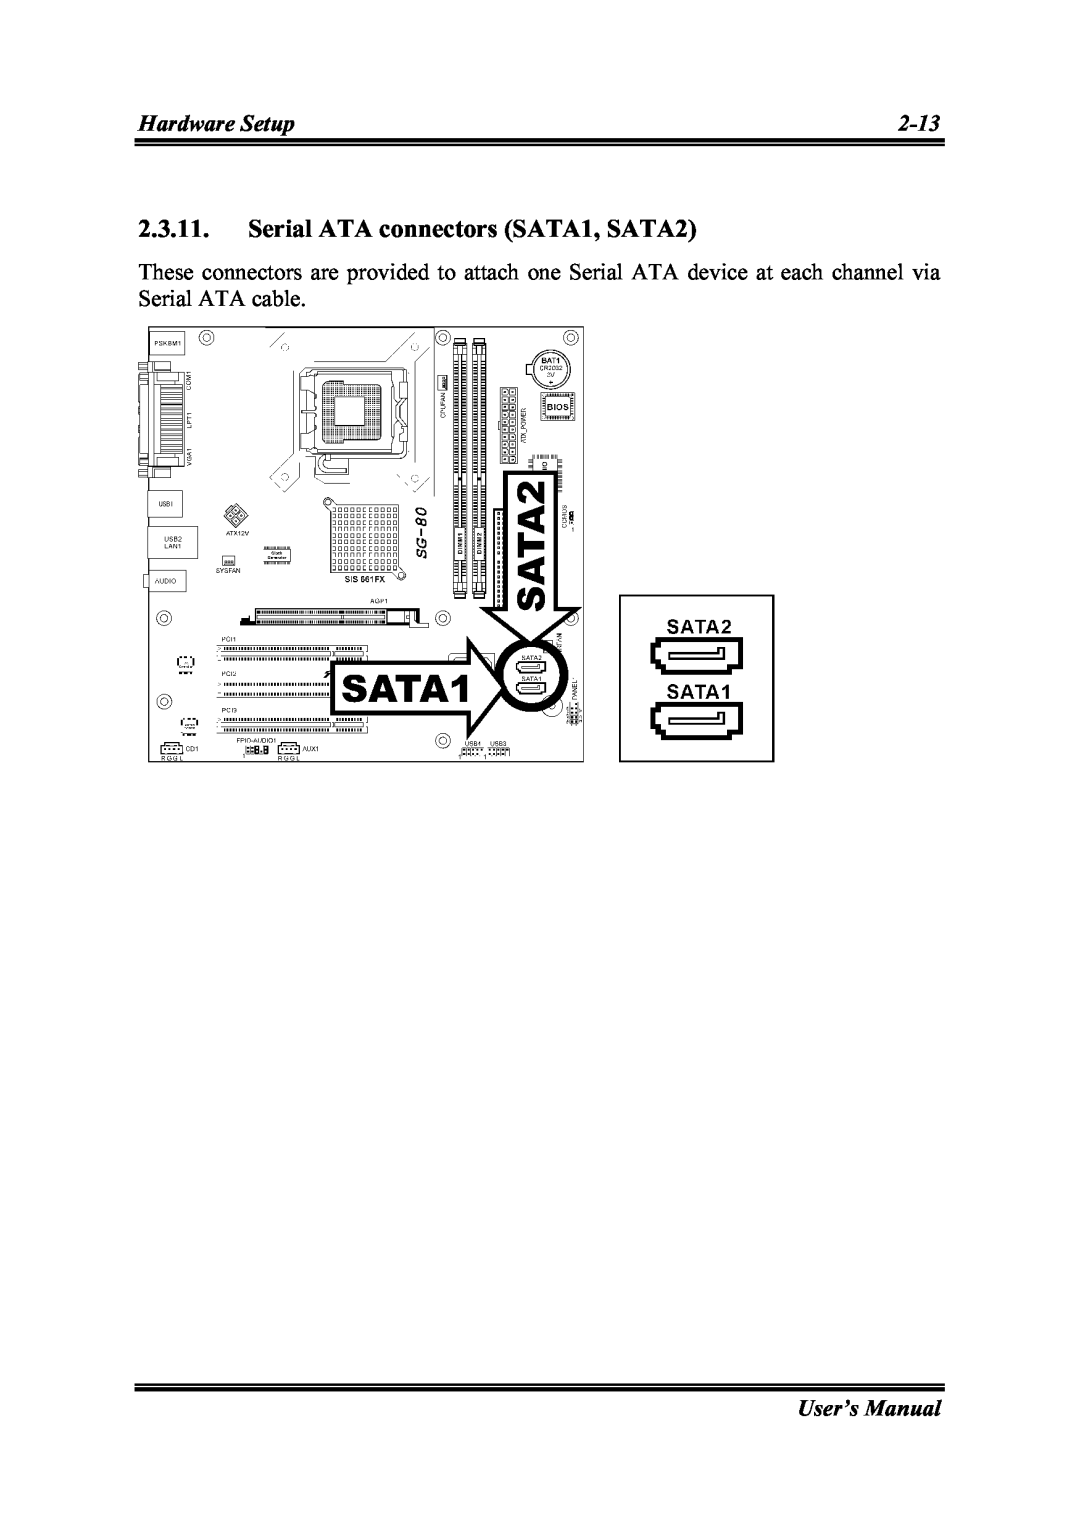 Intel SG-81, SG-80 user manual Serial ATA connectors SATA1, SATA2, Hardware Setup, 2-13, User’s Manual 